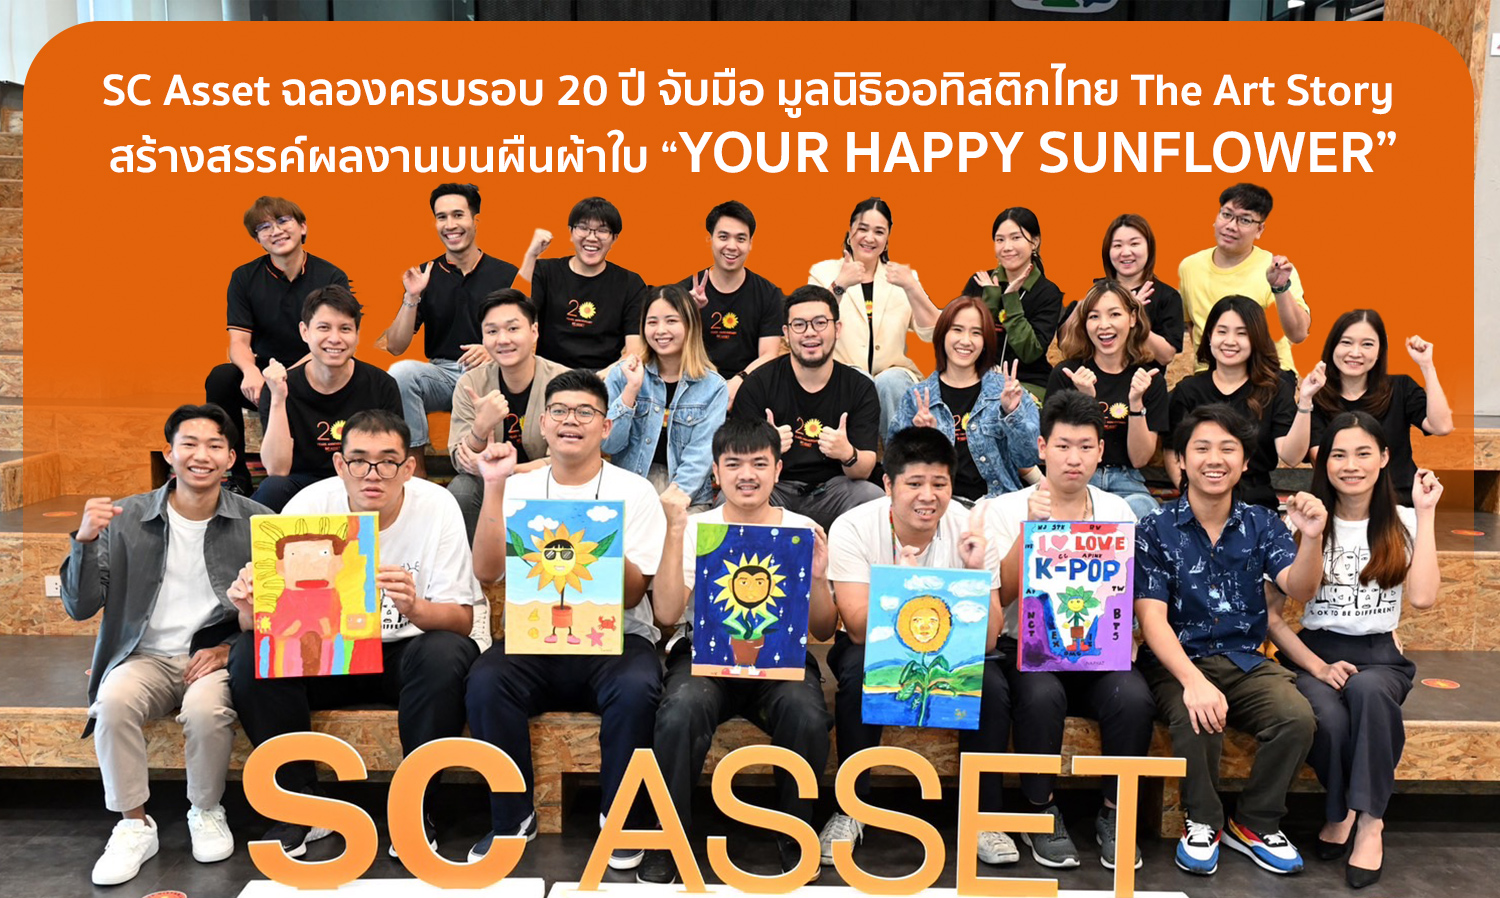 SC Asset ฉลองครบรอบ 20 ปี จับมือ มูลนิธิออทิสติกไทย The Art Story สร้างสรรค์ผลงานบนผืนผ้าใบ YOUR HAPPY SUNFLOWER